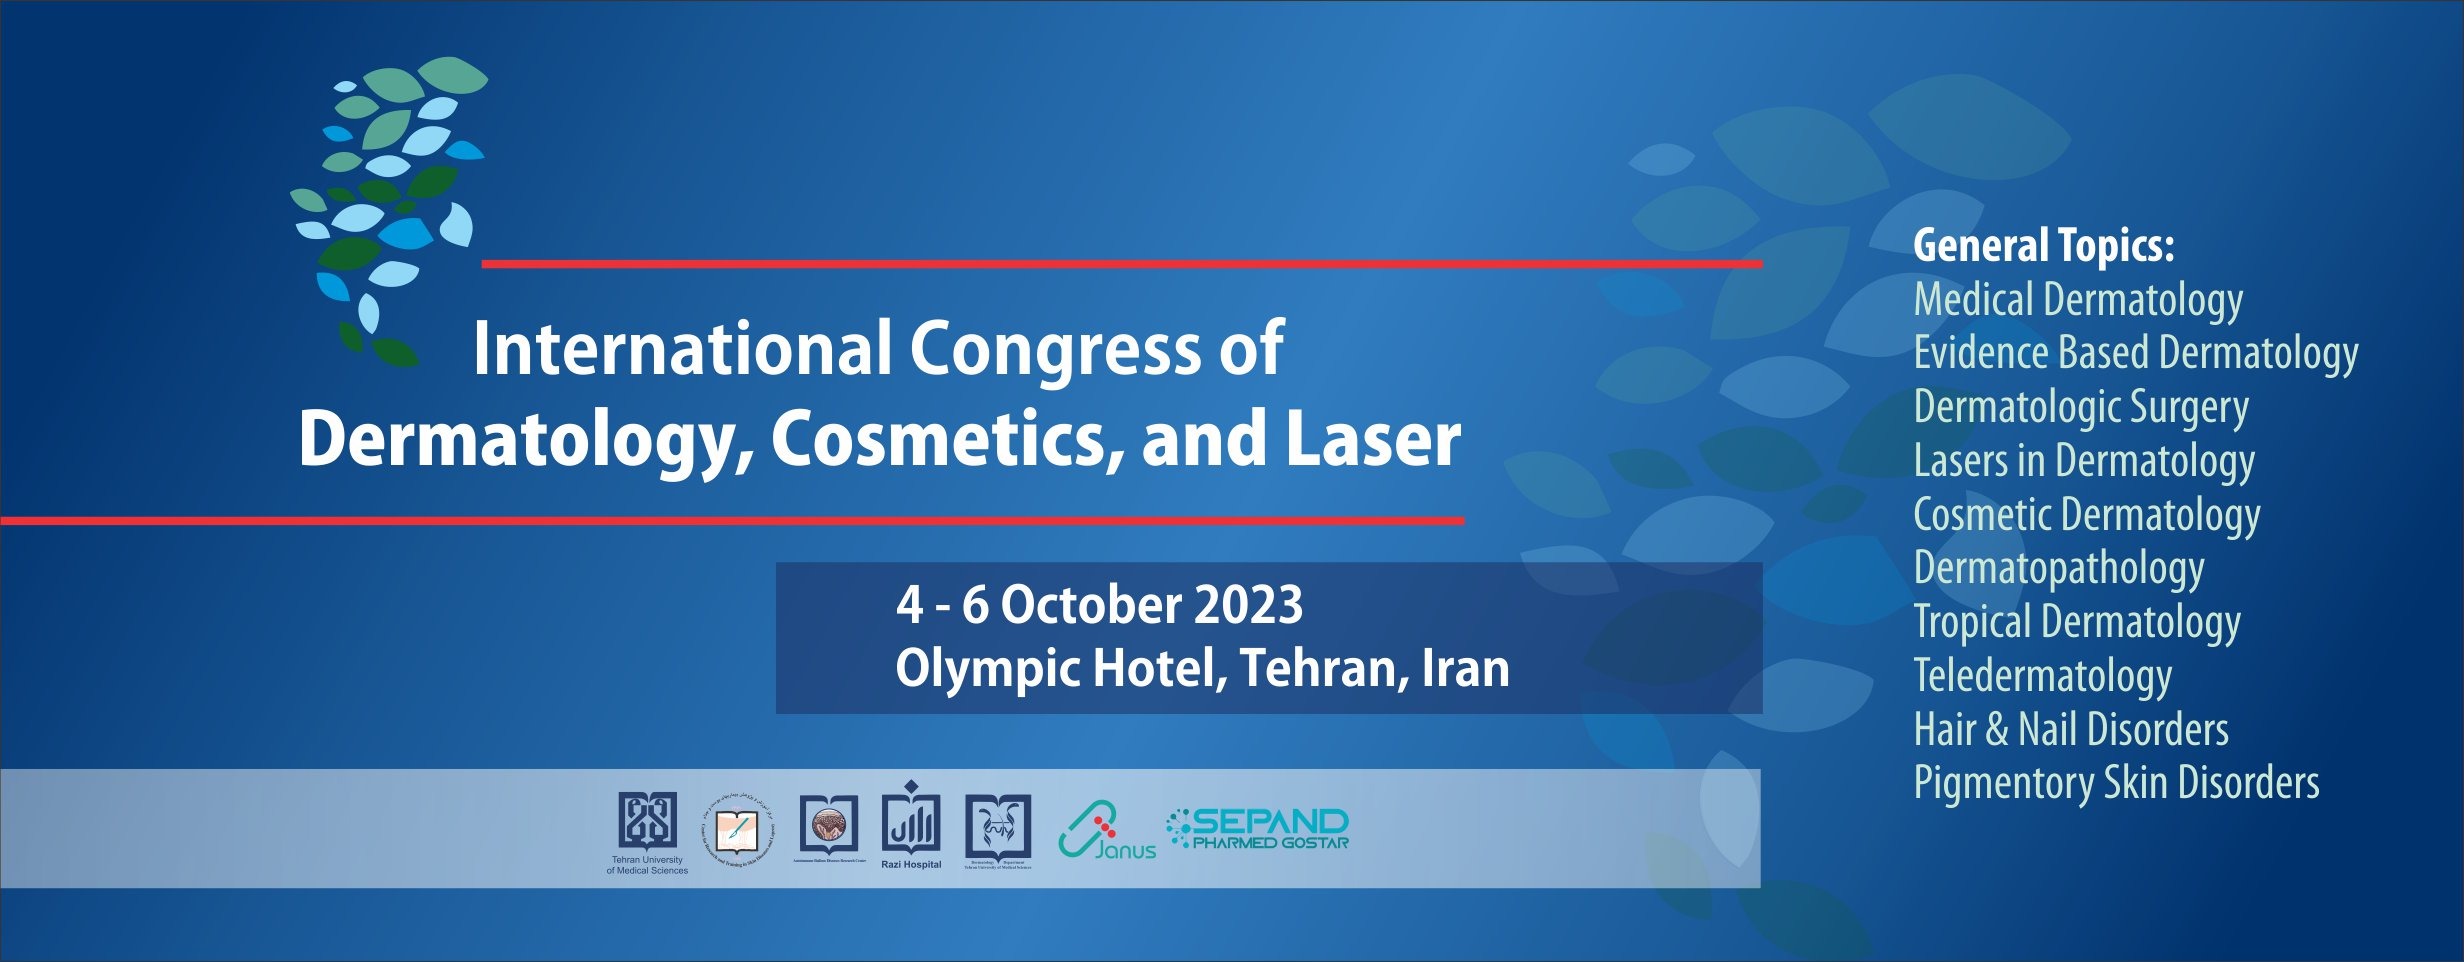 International Congress of Dermatology, Cosmetics & Laser 2023